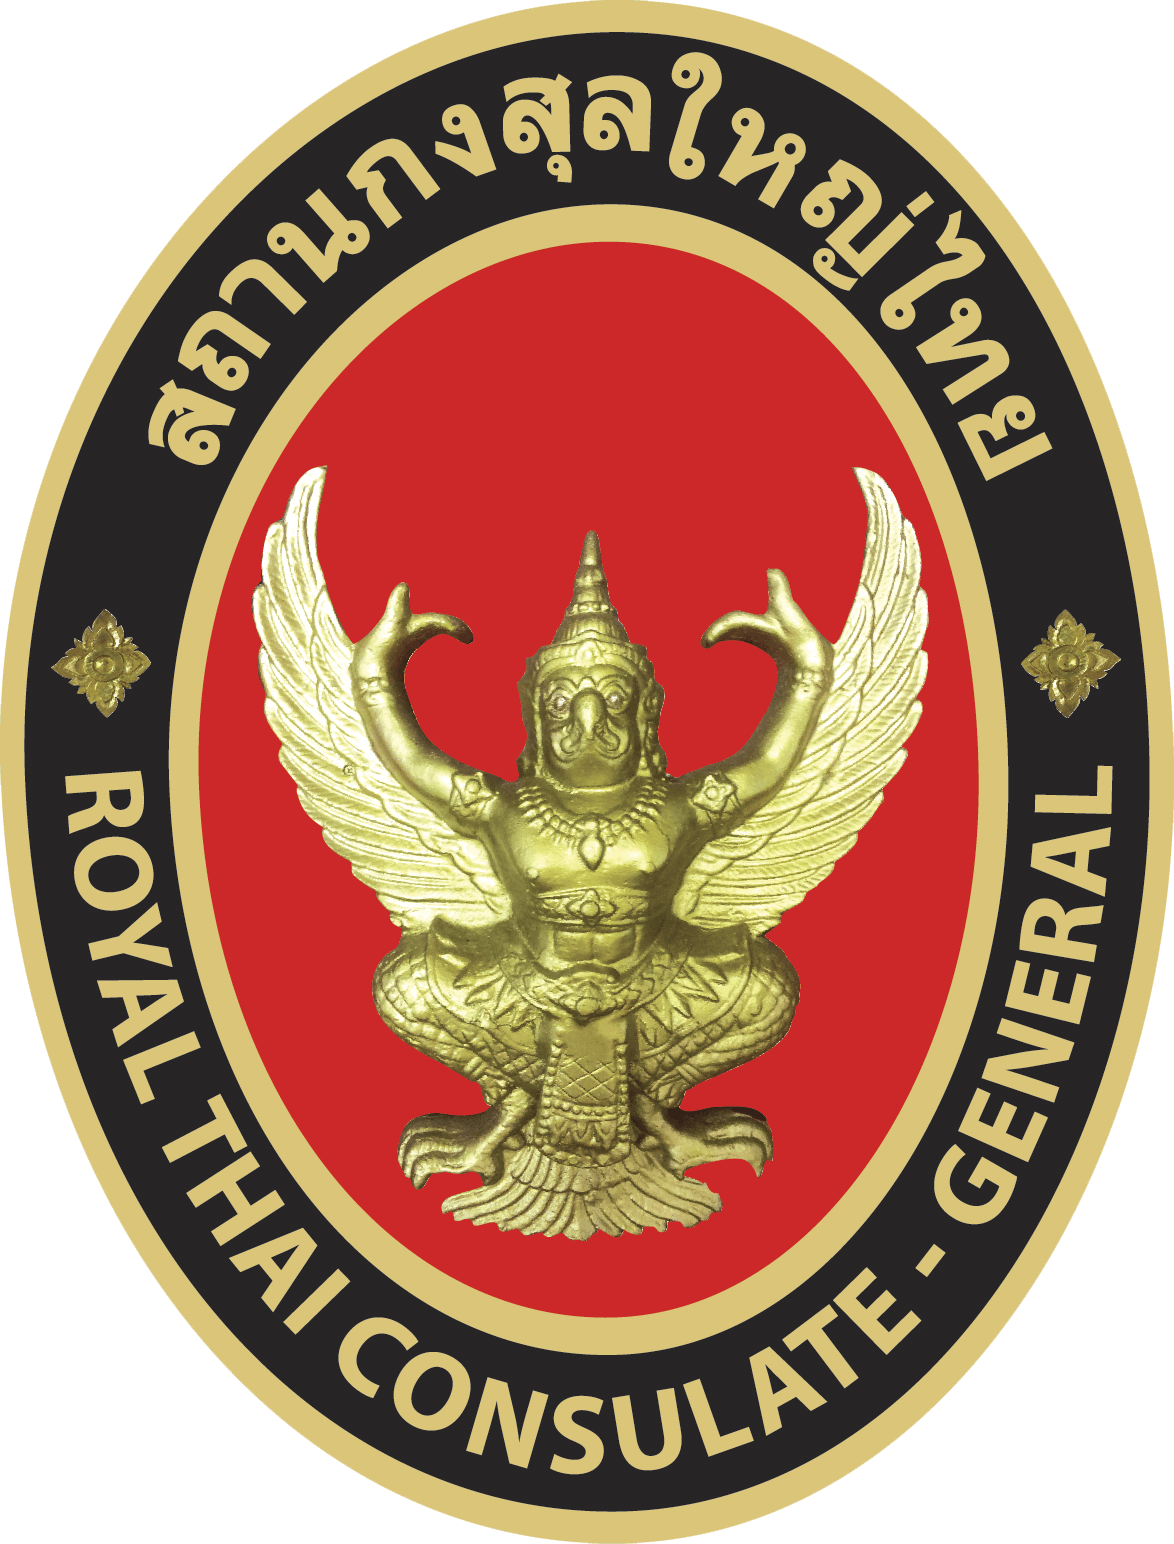 Royal Thai Consulate General logo.